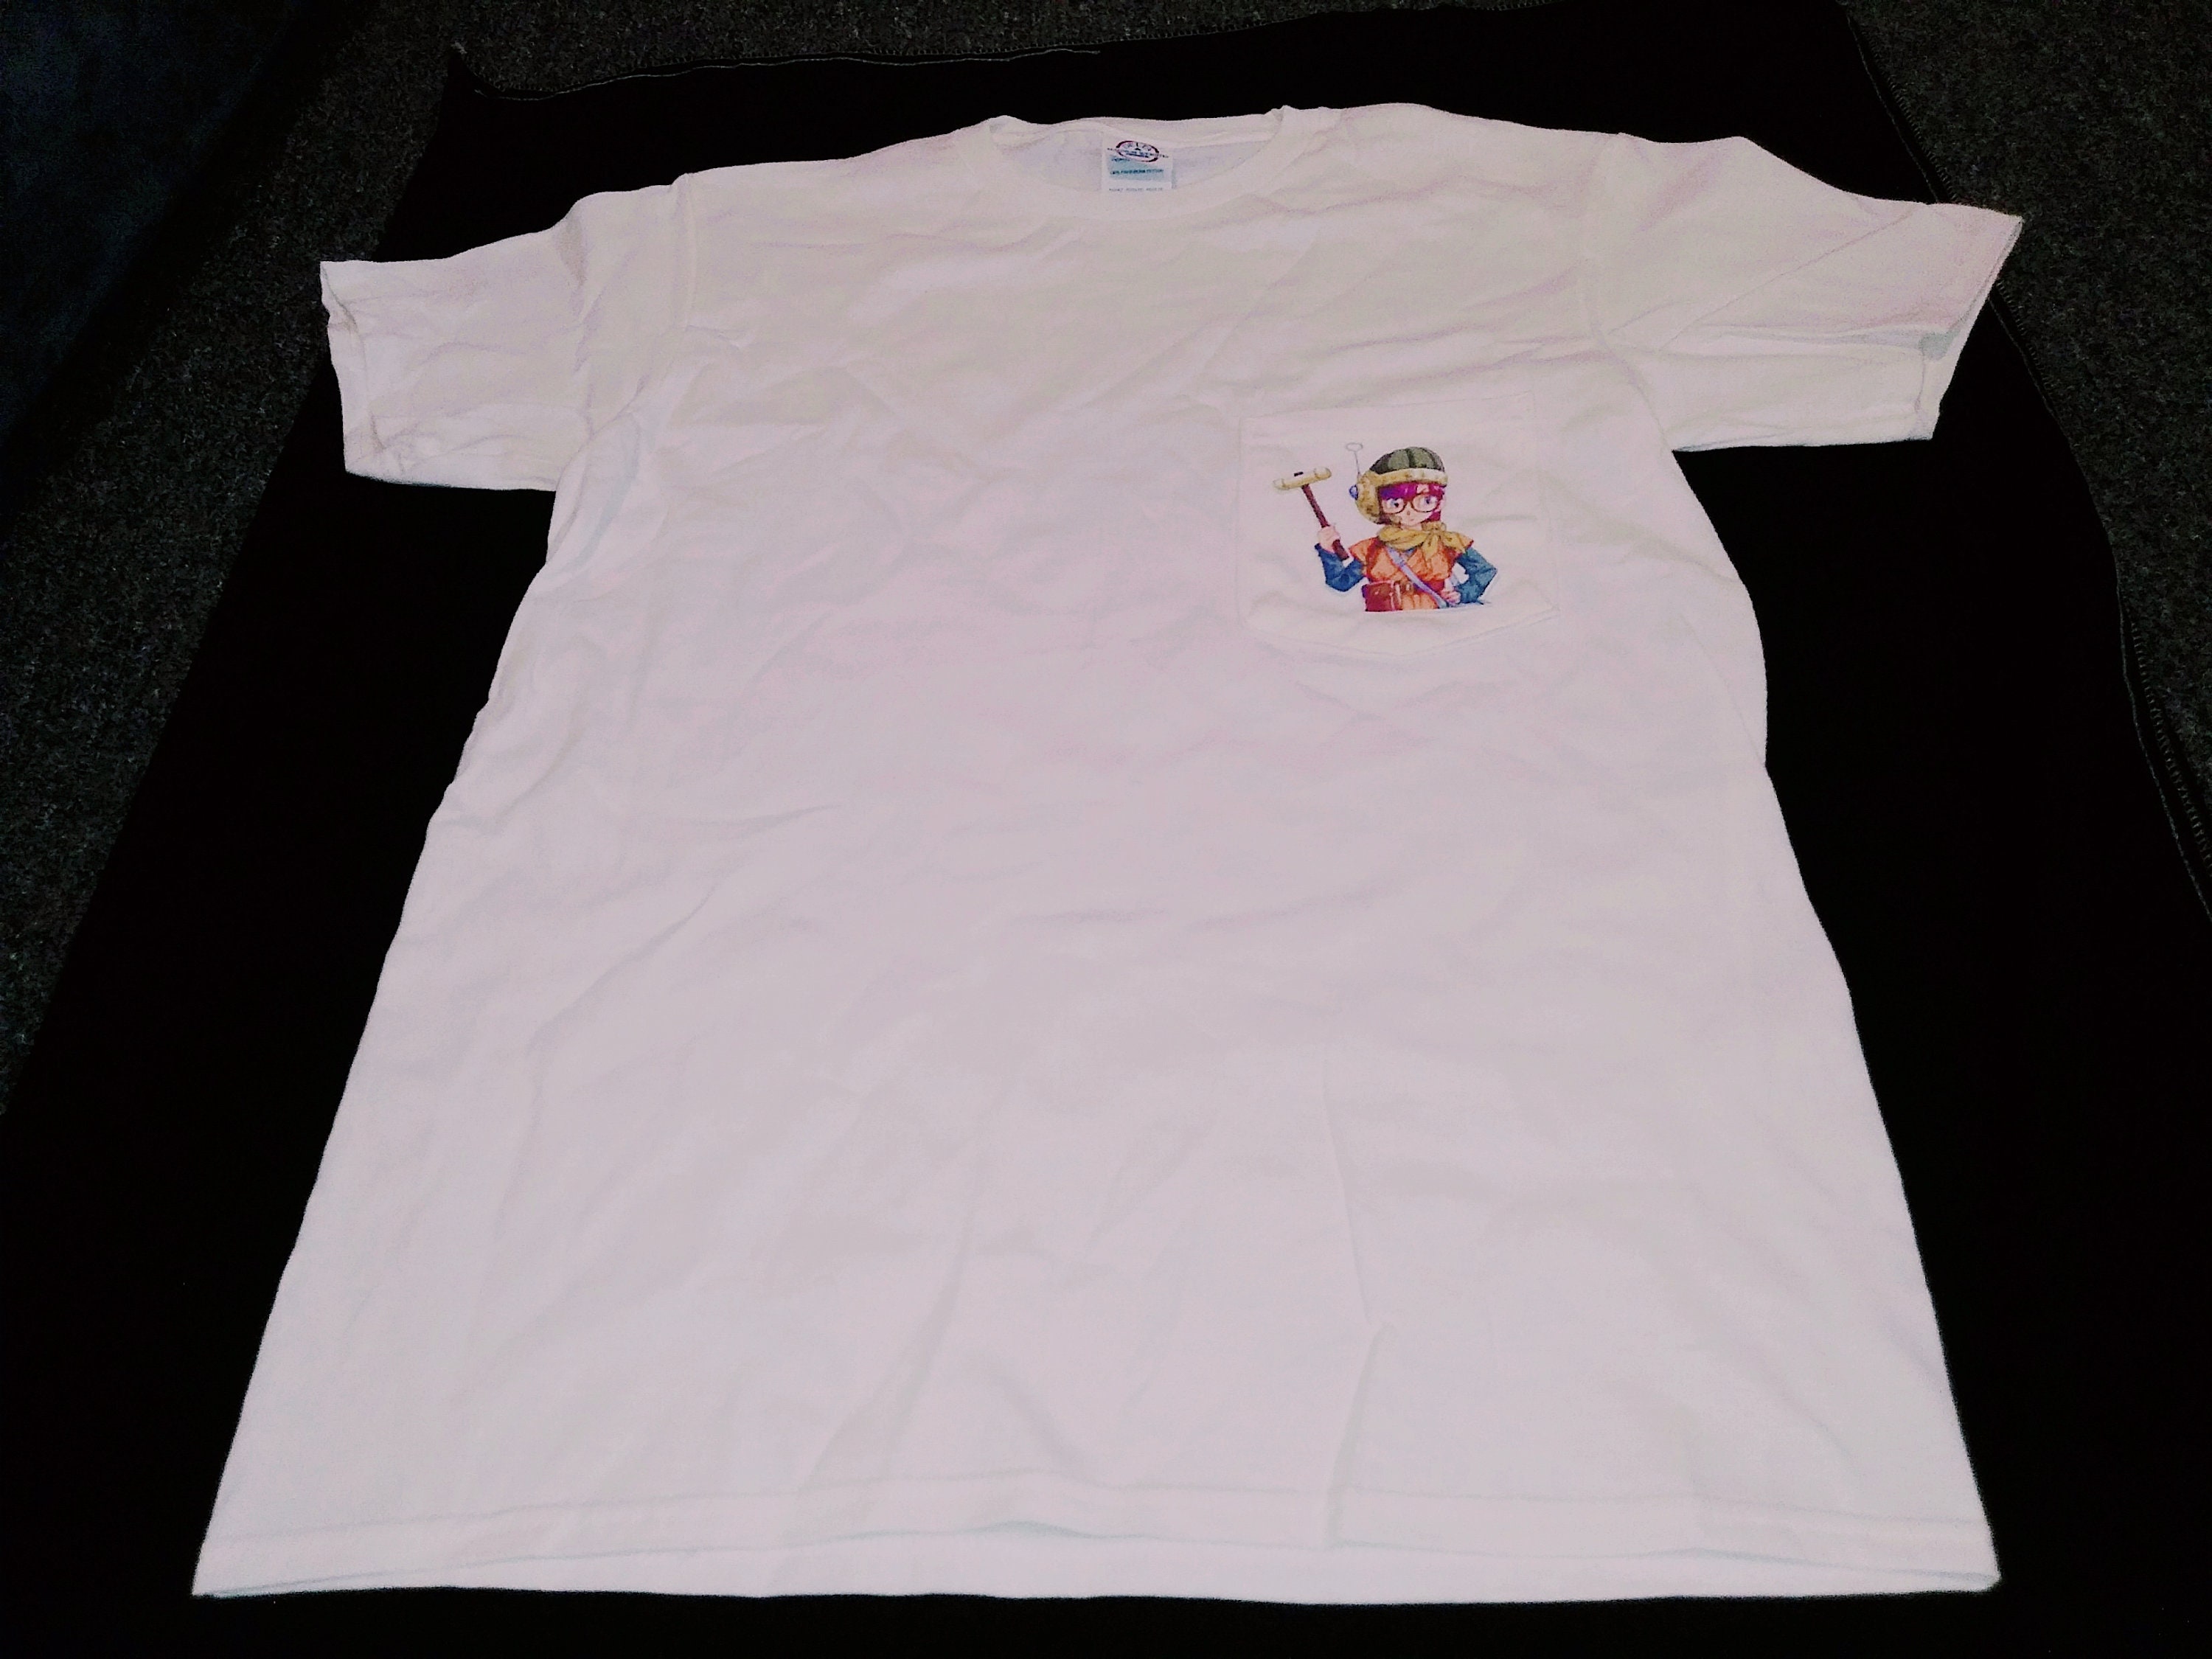 Chrono Trigger: Lucca pocket t shirt | Etsy